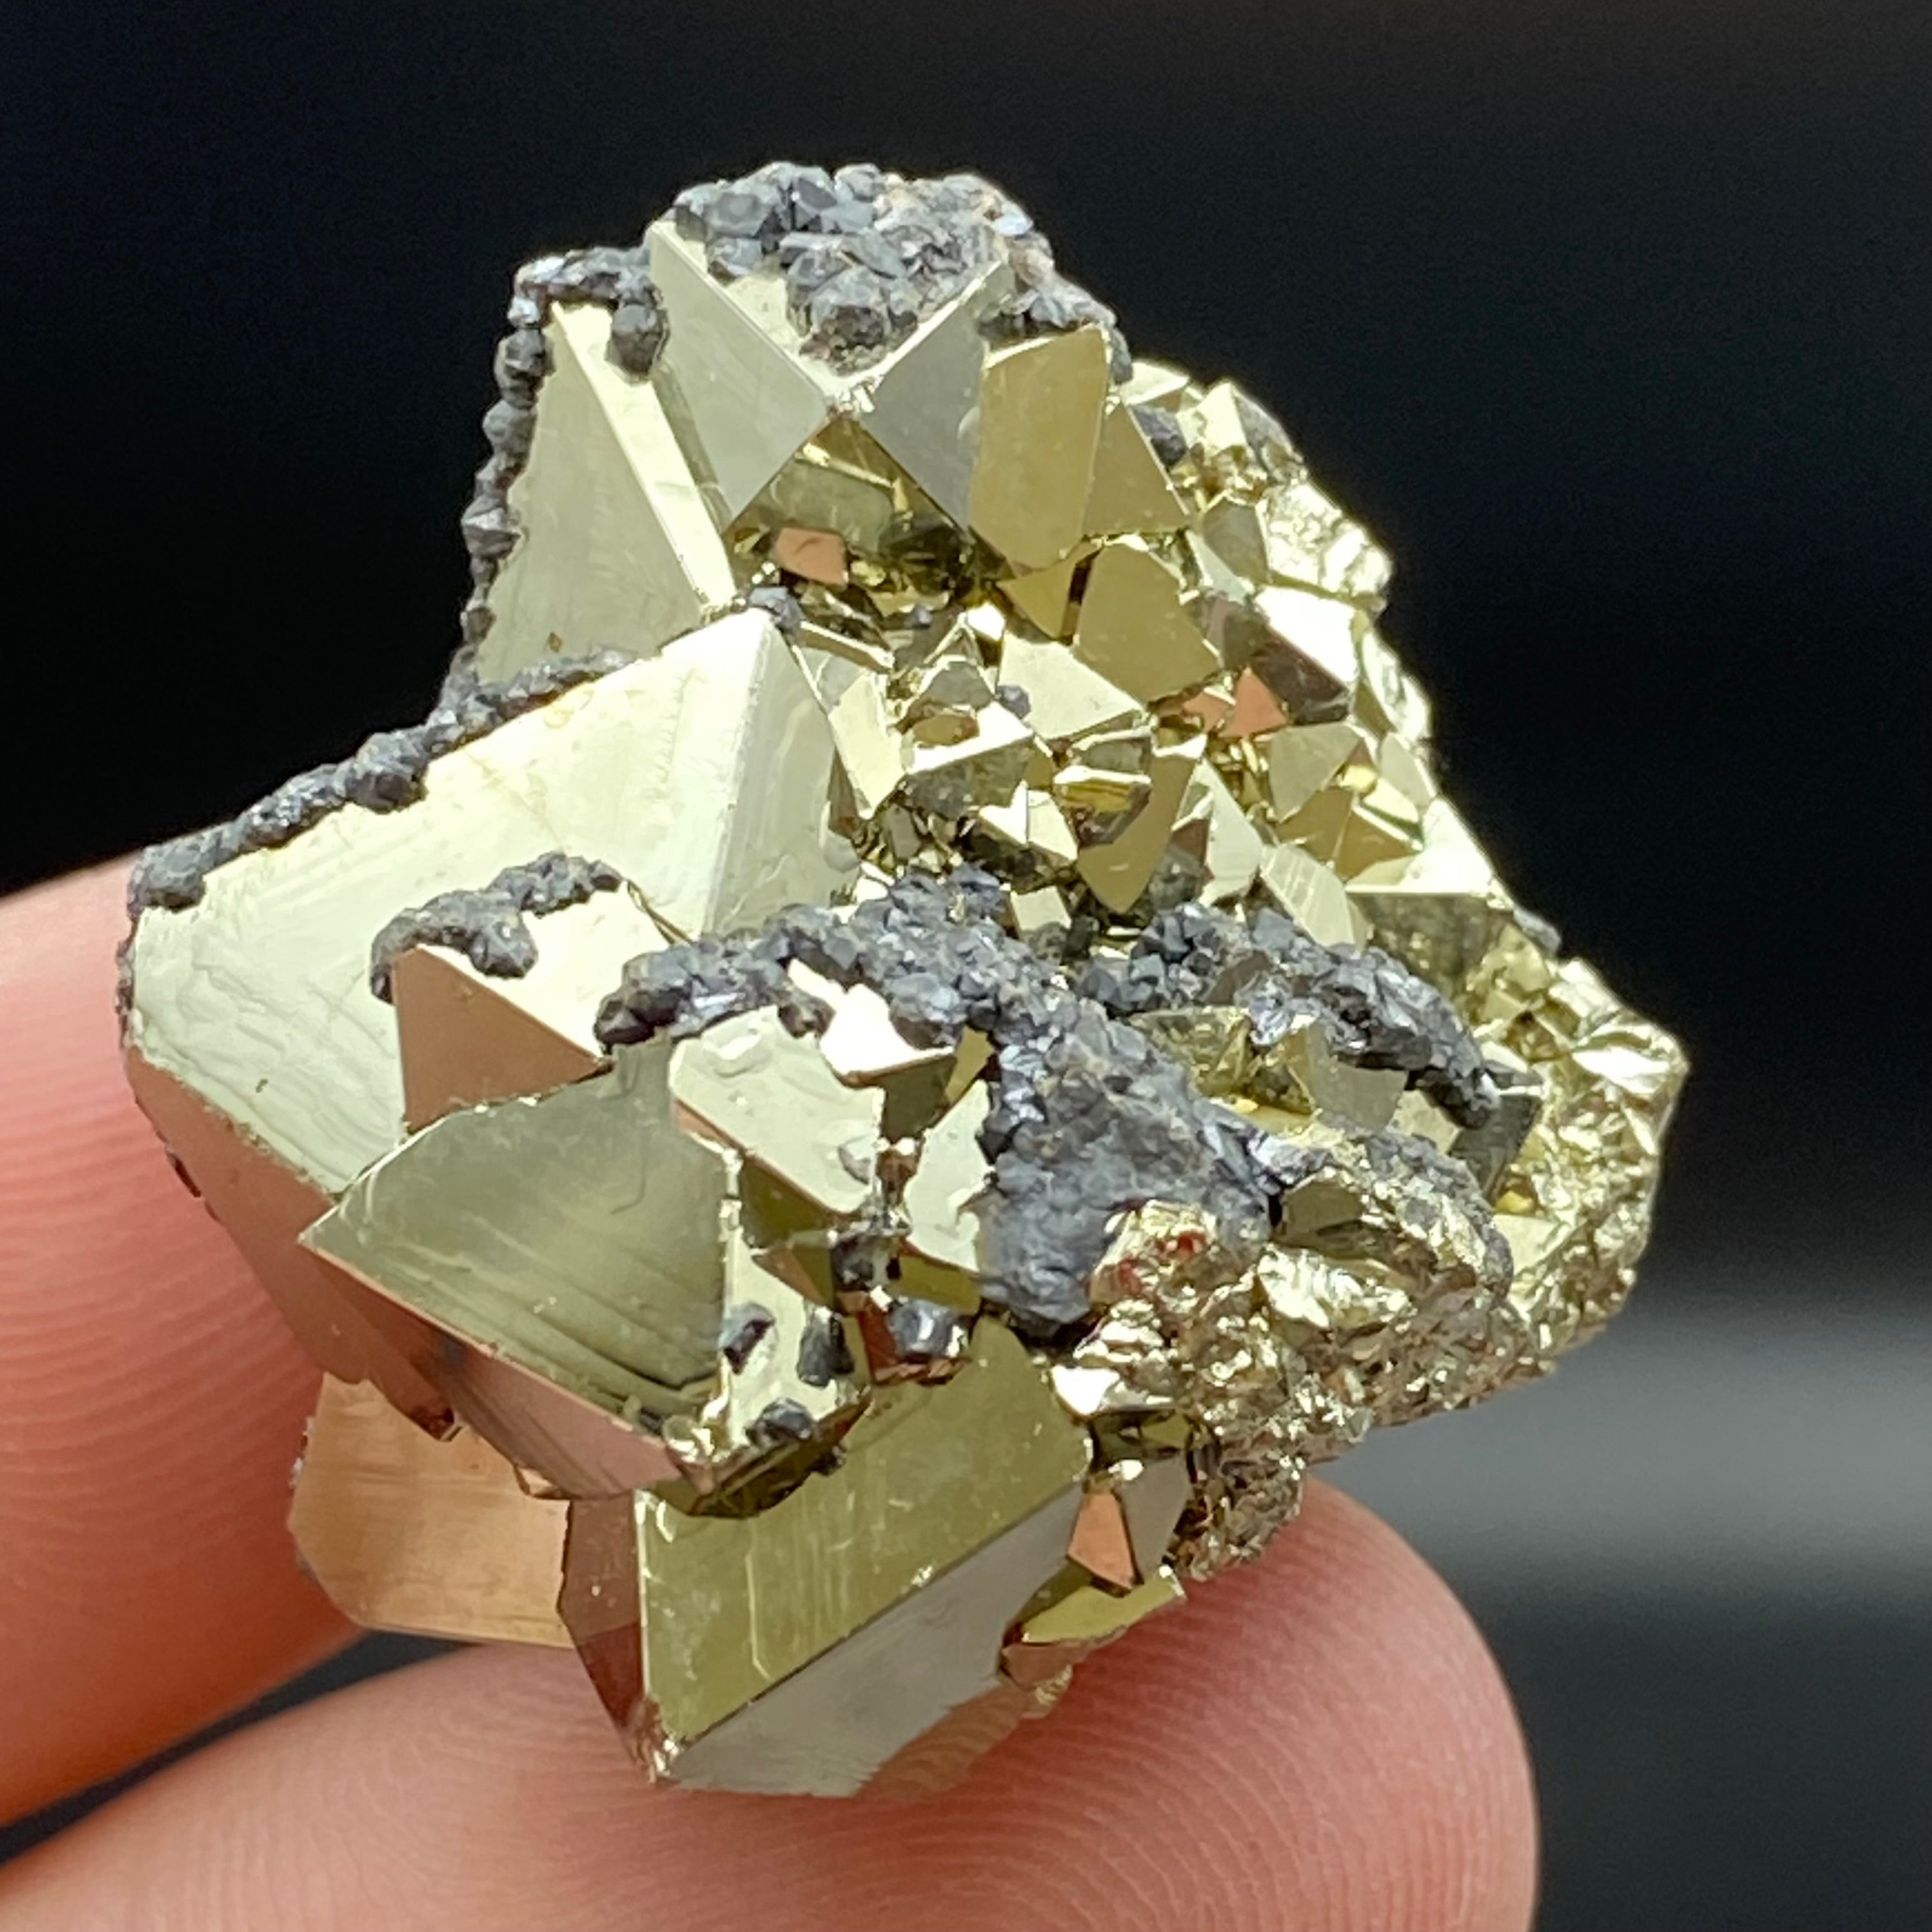 Peruvian Pyrite Crystal - 149